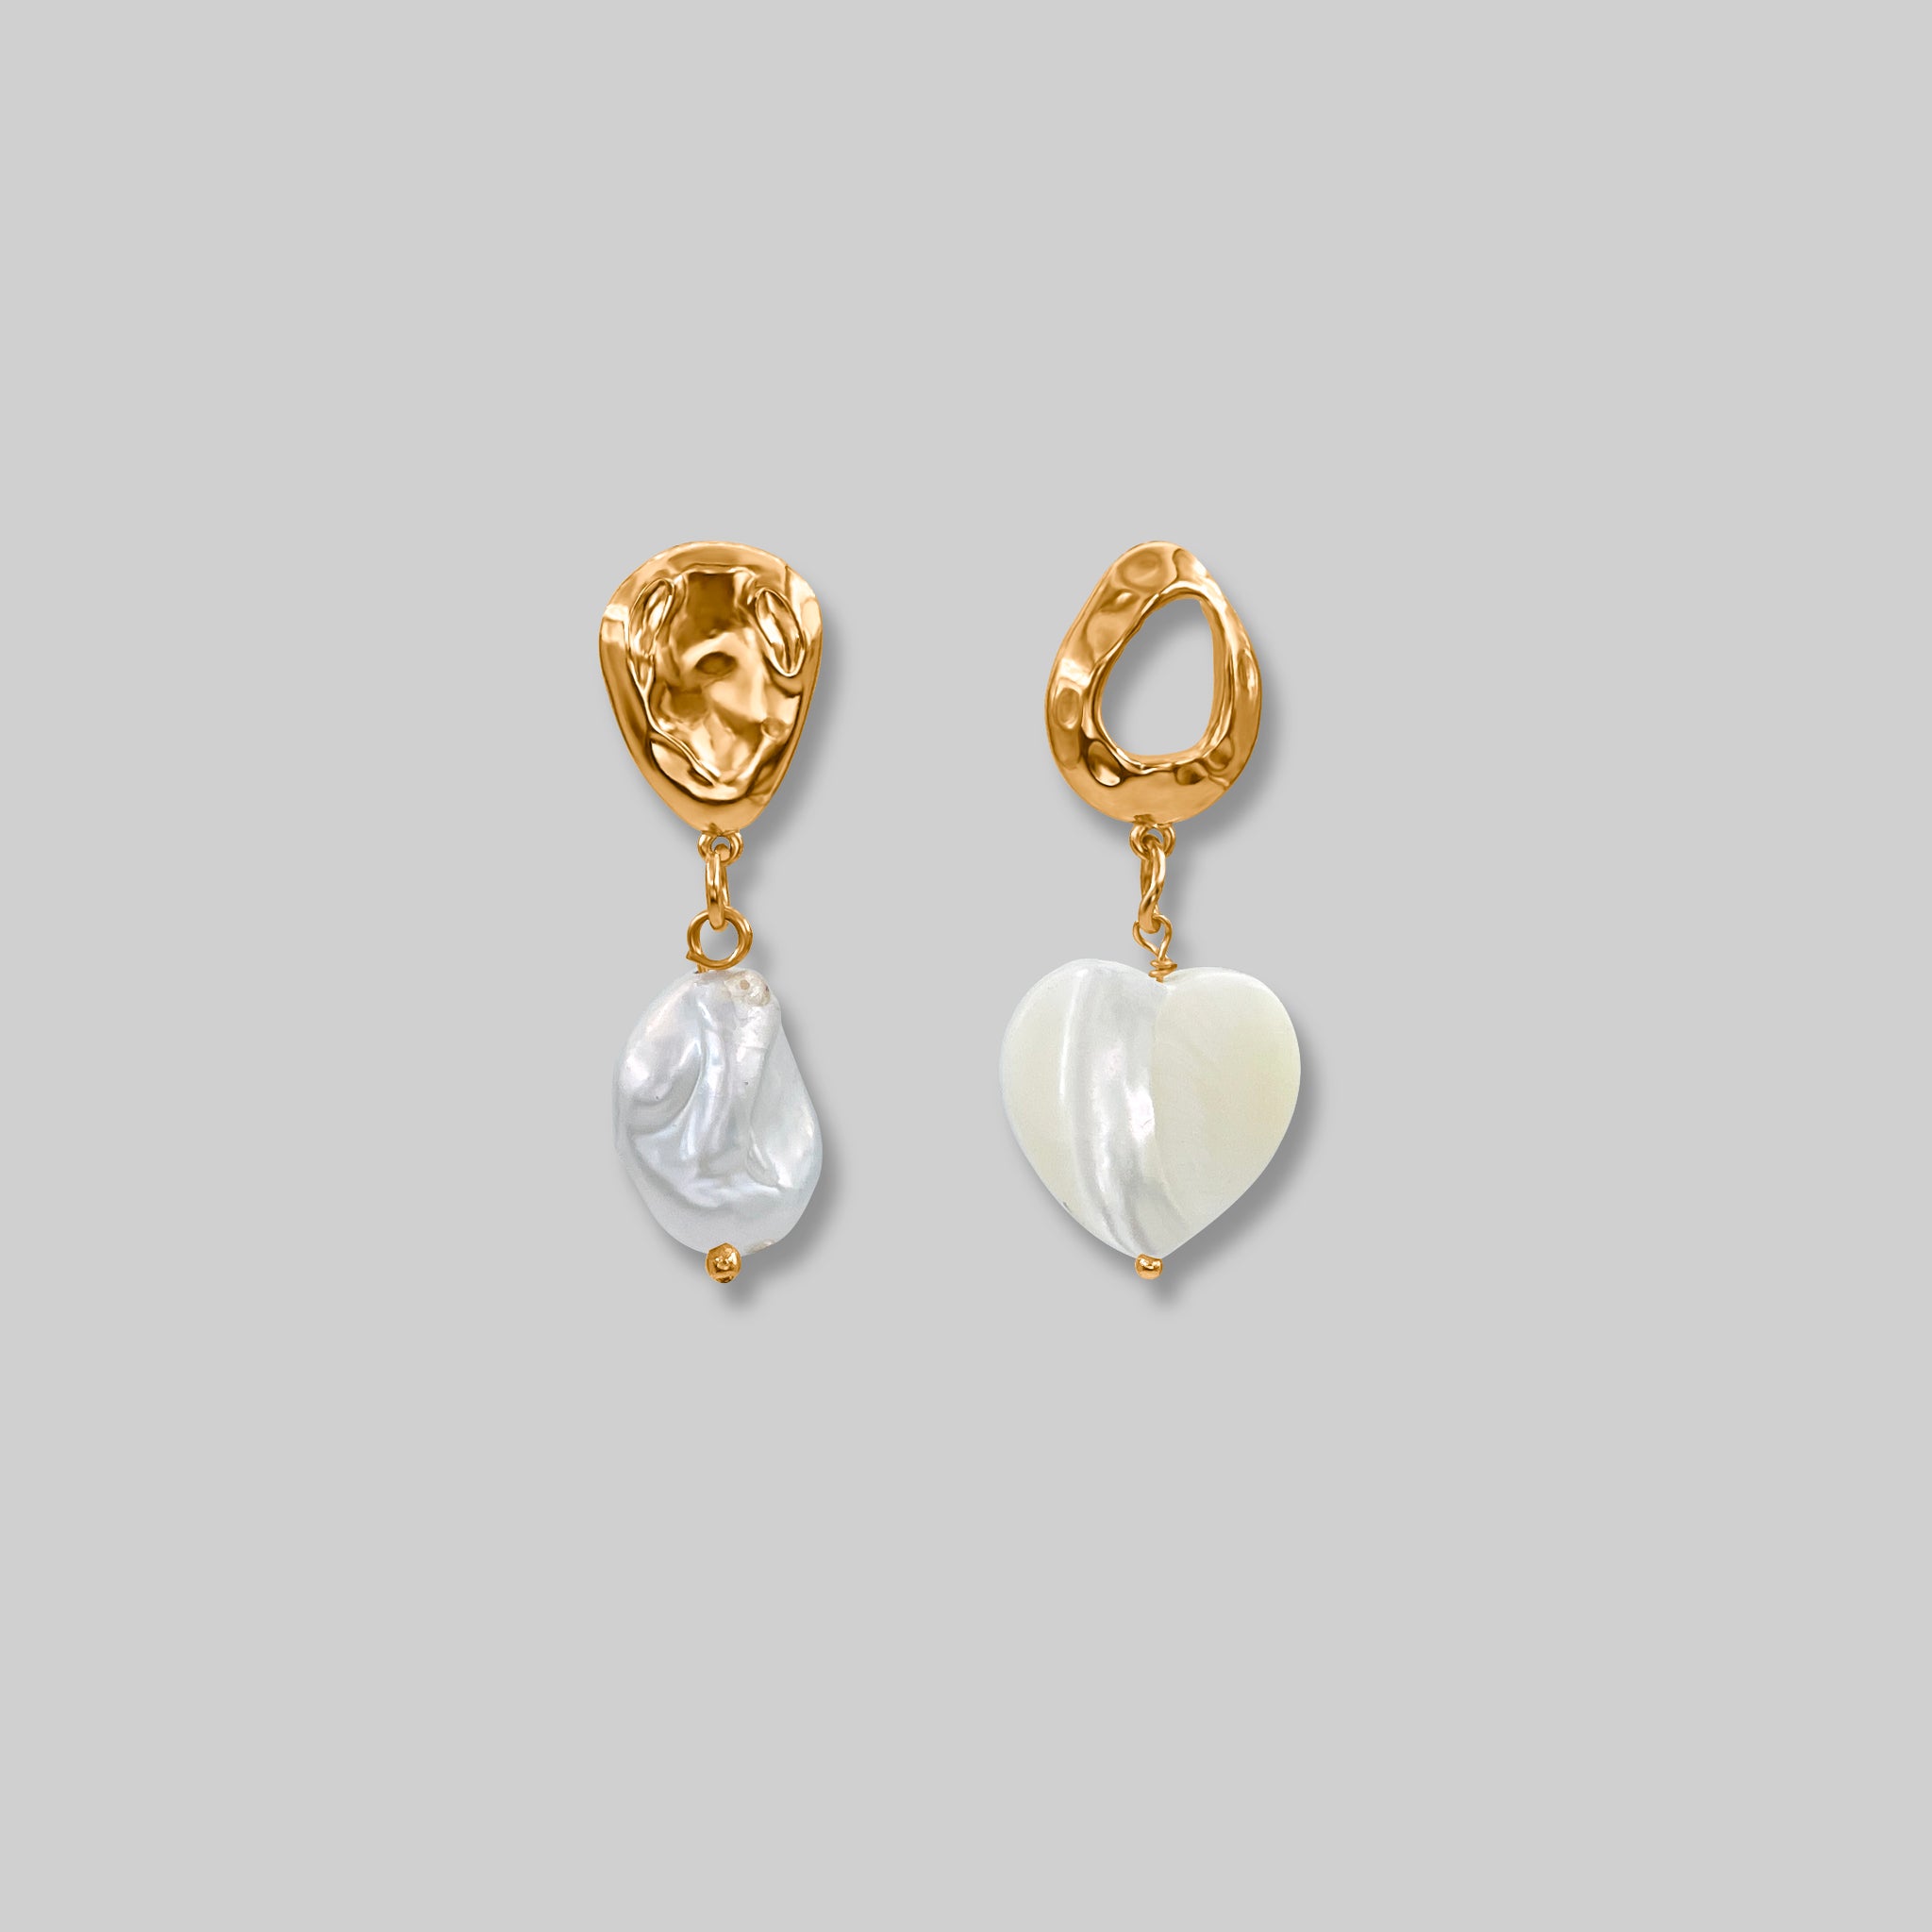 Vintage heart mismatched earrings